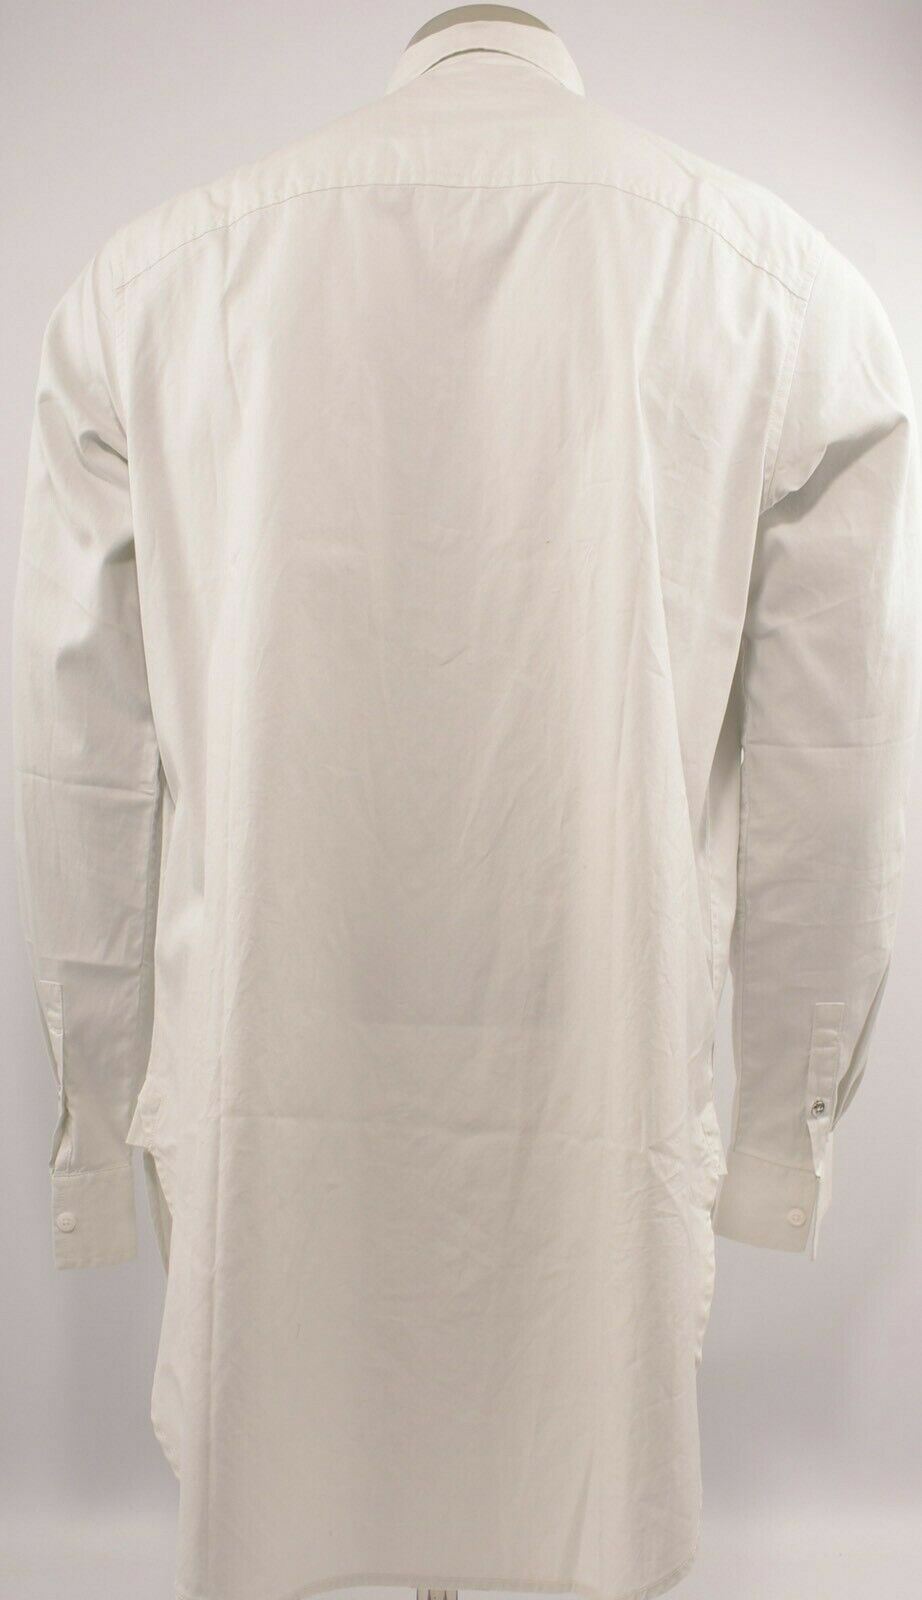 DIESEL Men's S-FILT Cotton Long Sleeve Shirt, Light Pastel Green, size Small